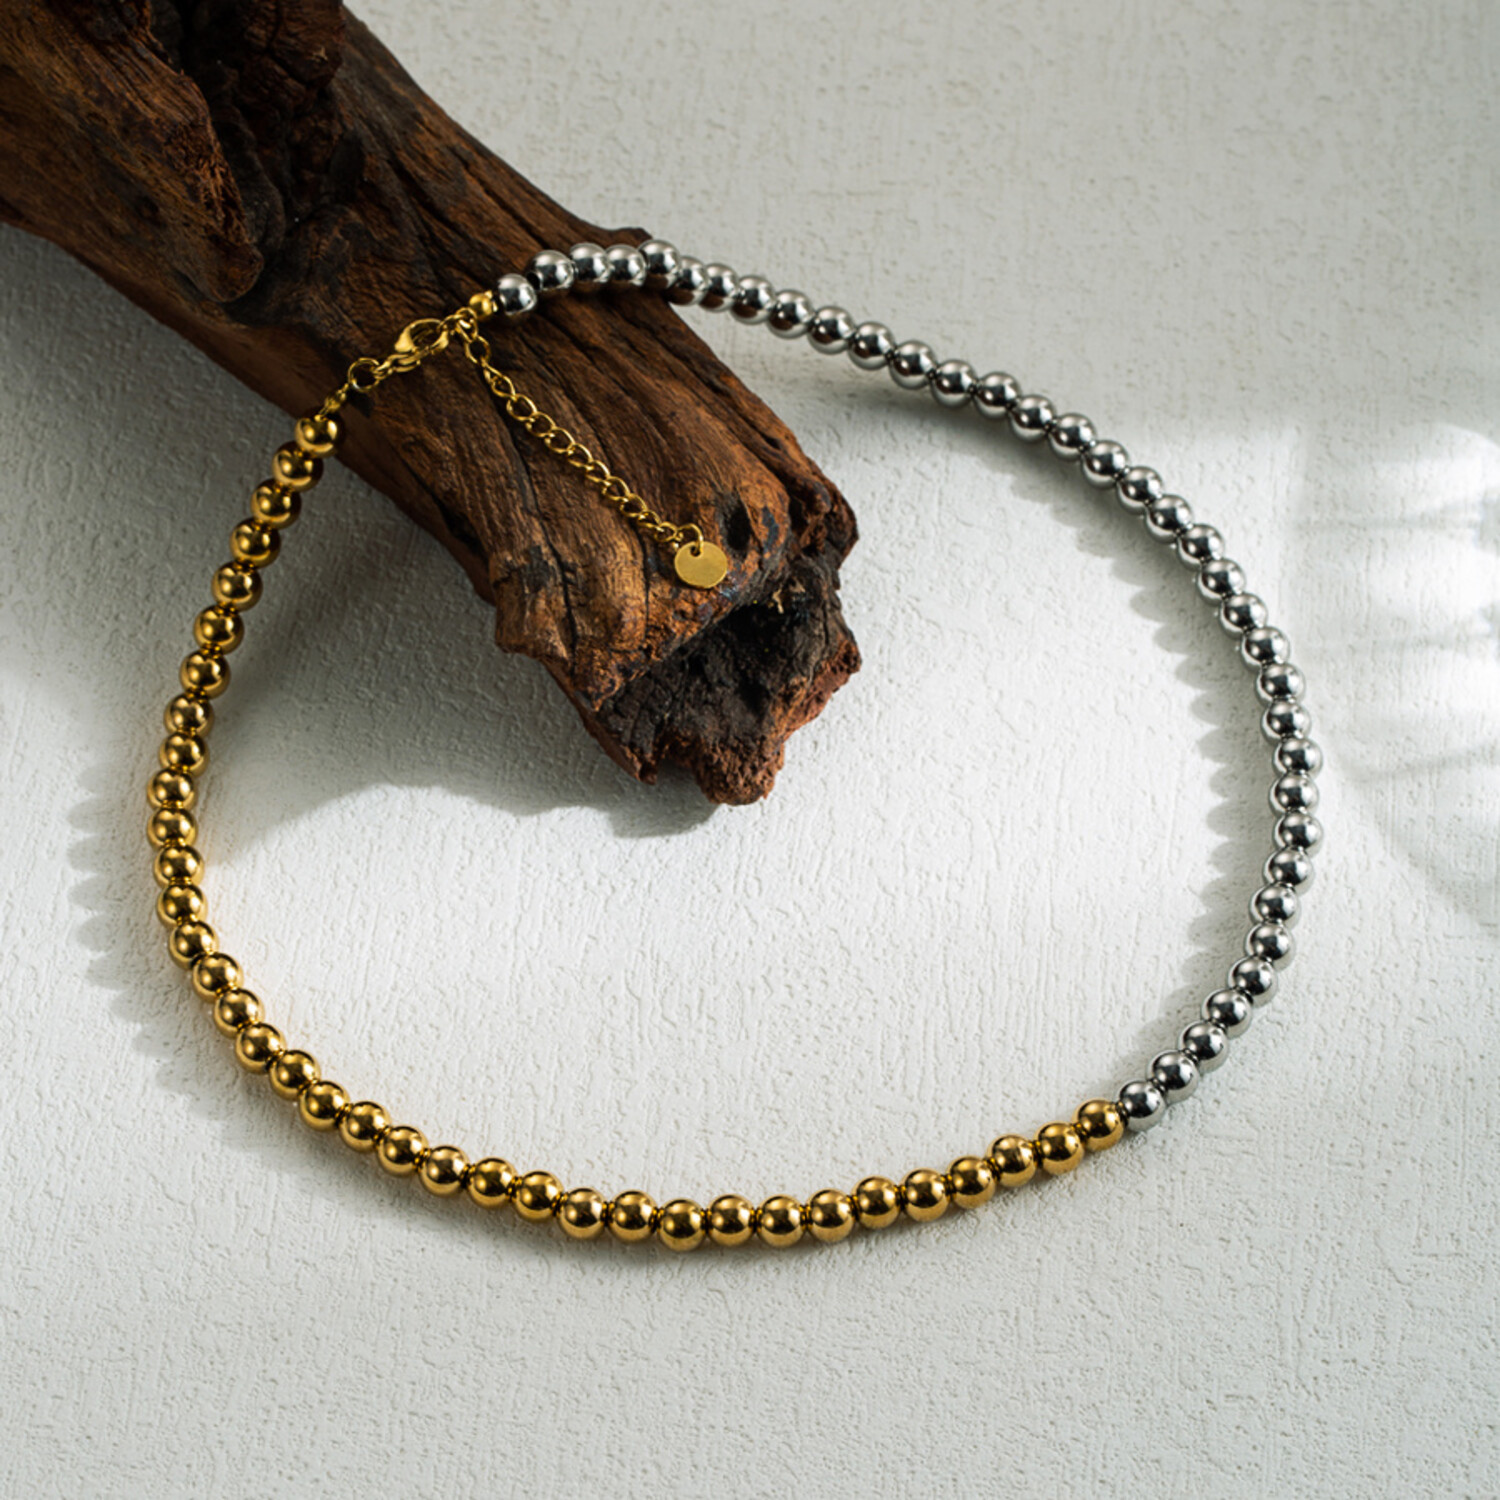 Amazonite Semi-Precious Balance Bead Necklace in 18K Gold Plating - MYKA